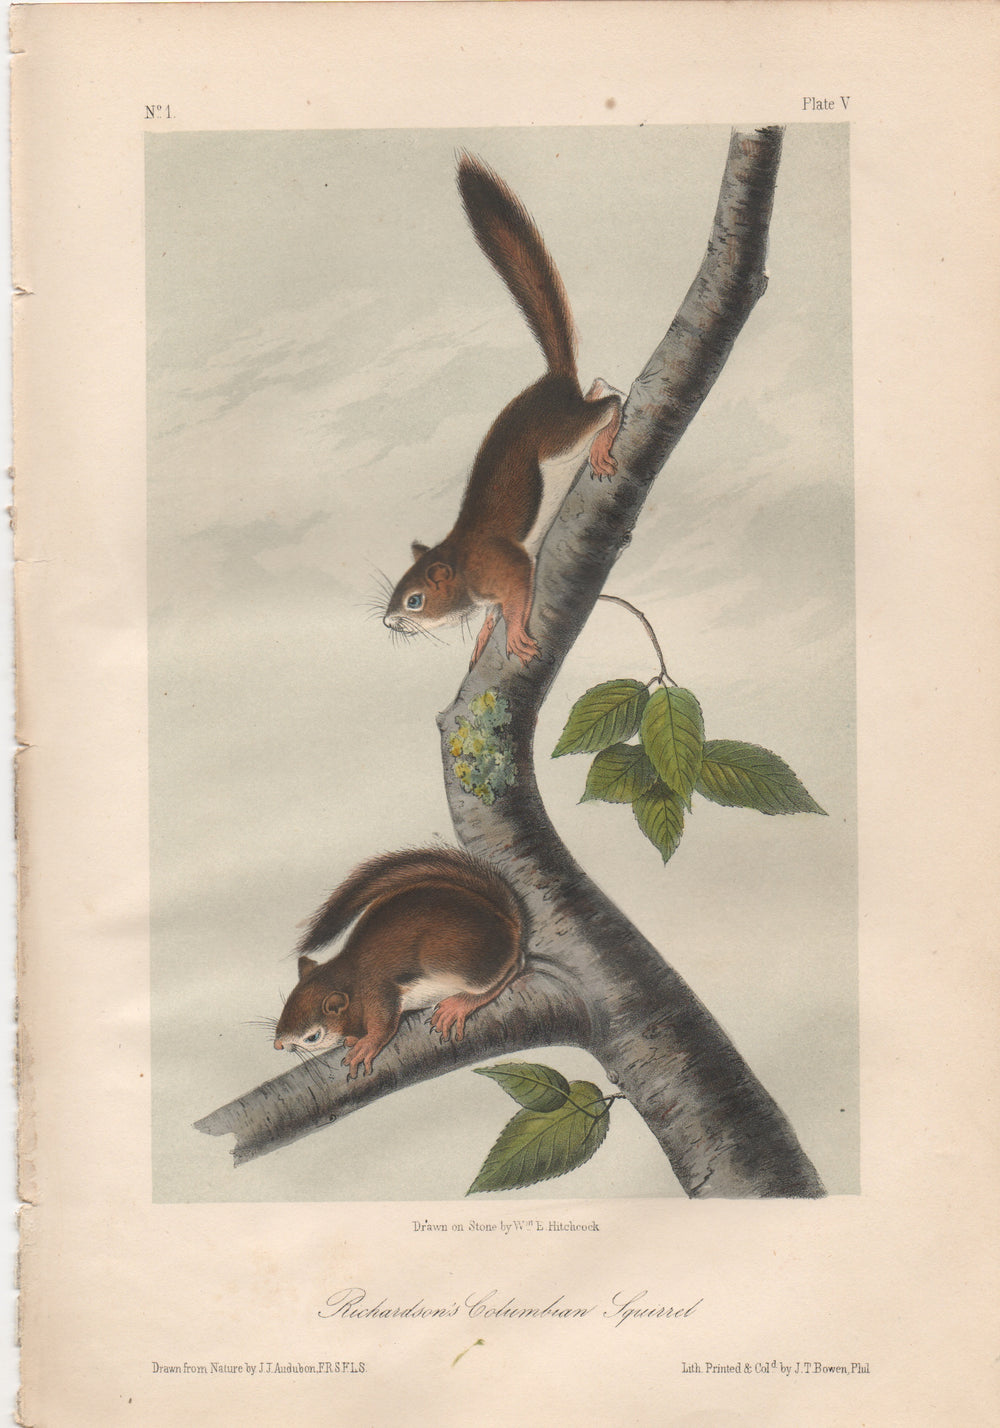 Audubon Original Octavo Mammal, Richardson's Columbian Squirrel, plate 5